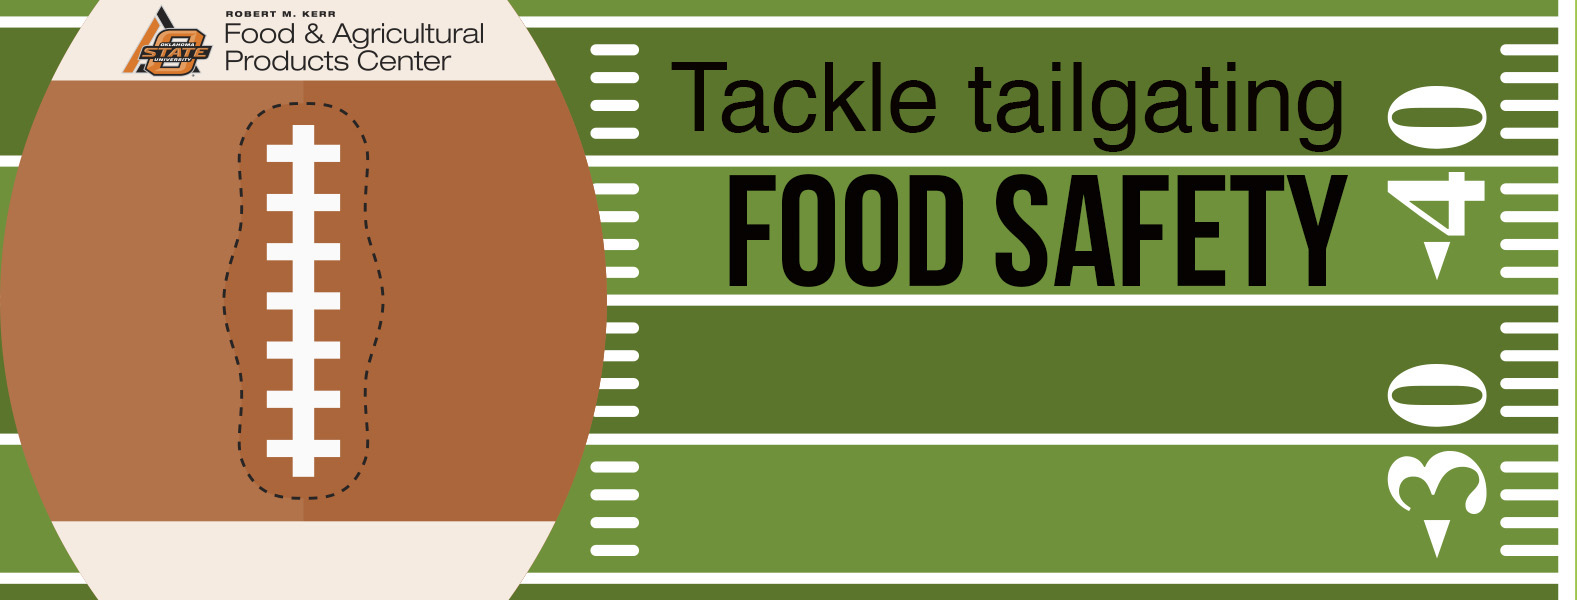 Tackle food safety during tailgating season